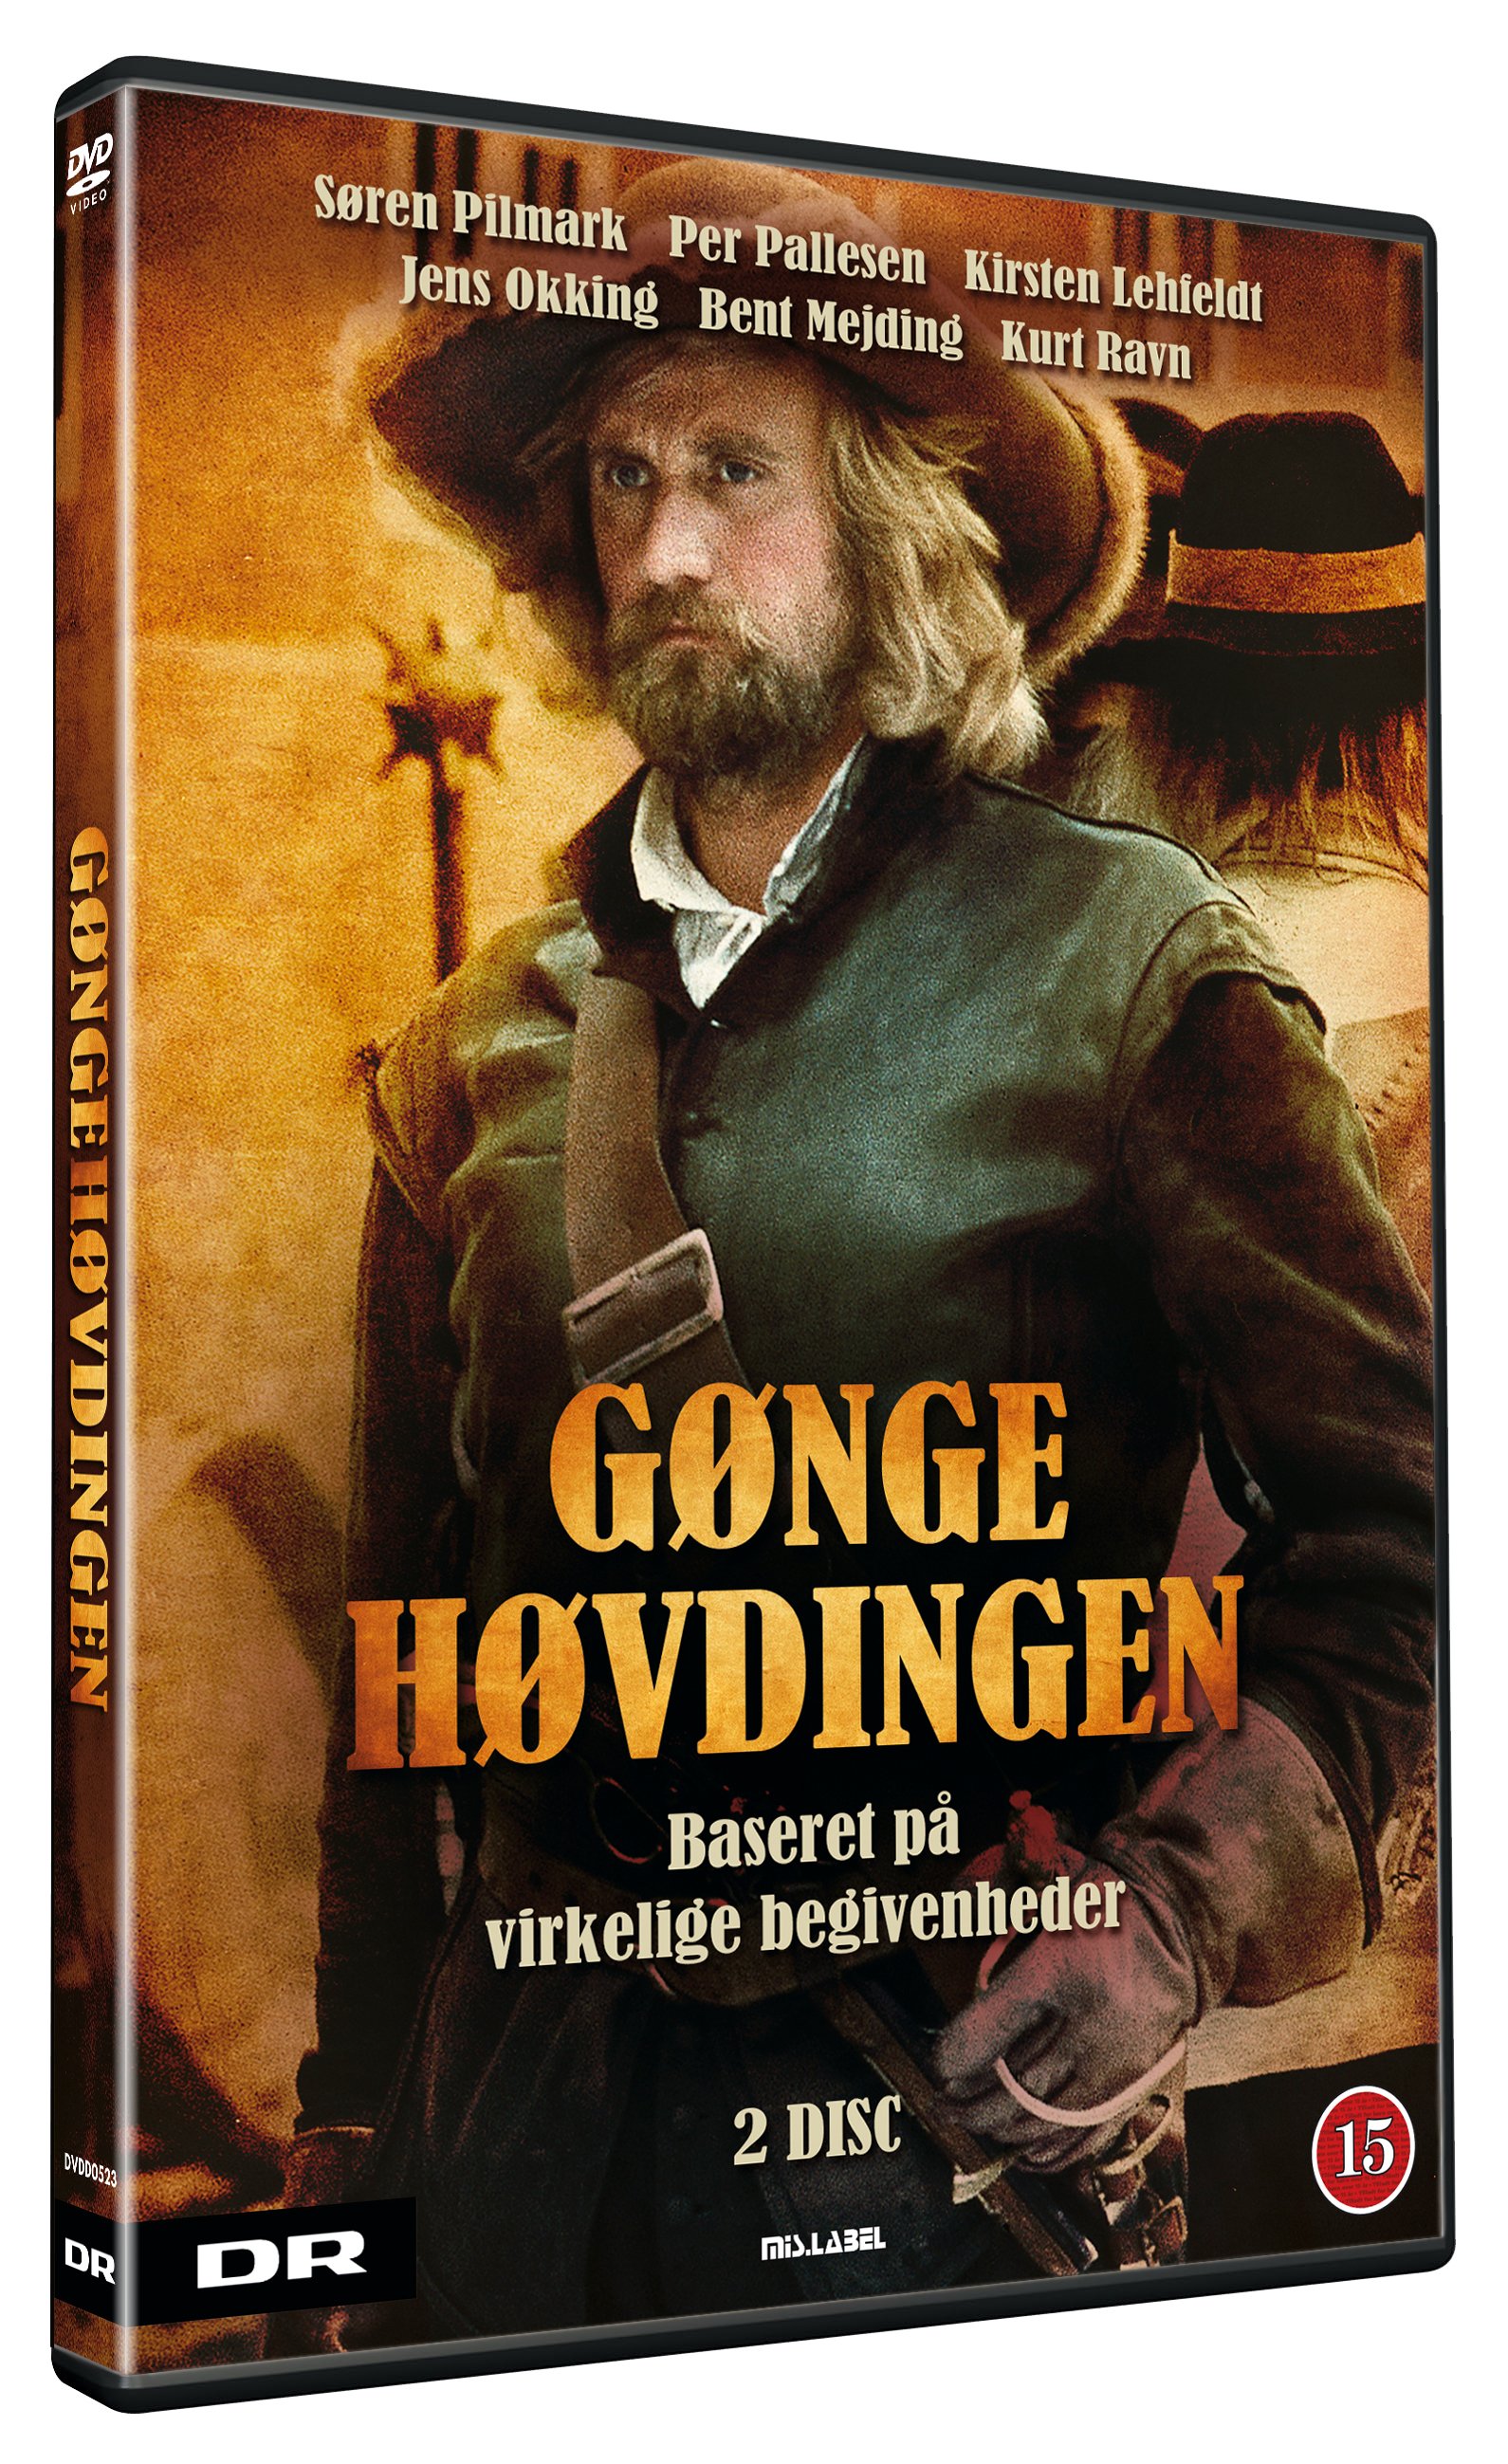 Gøngehøvdingen (Søren Pilmark) - DVD von Mis Label